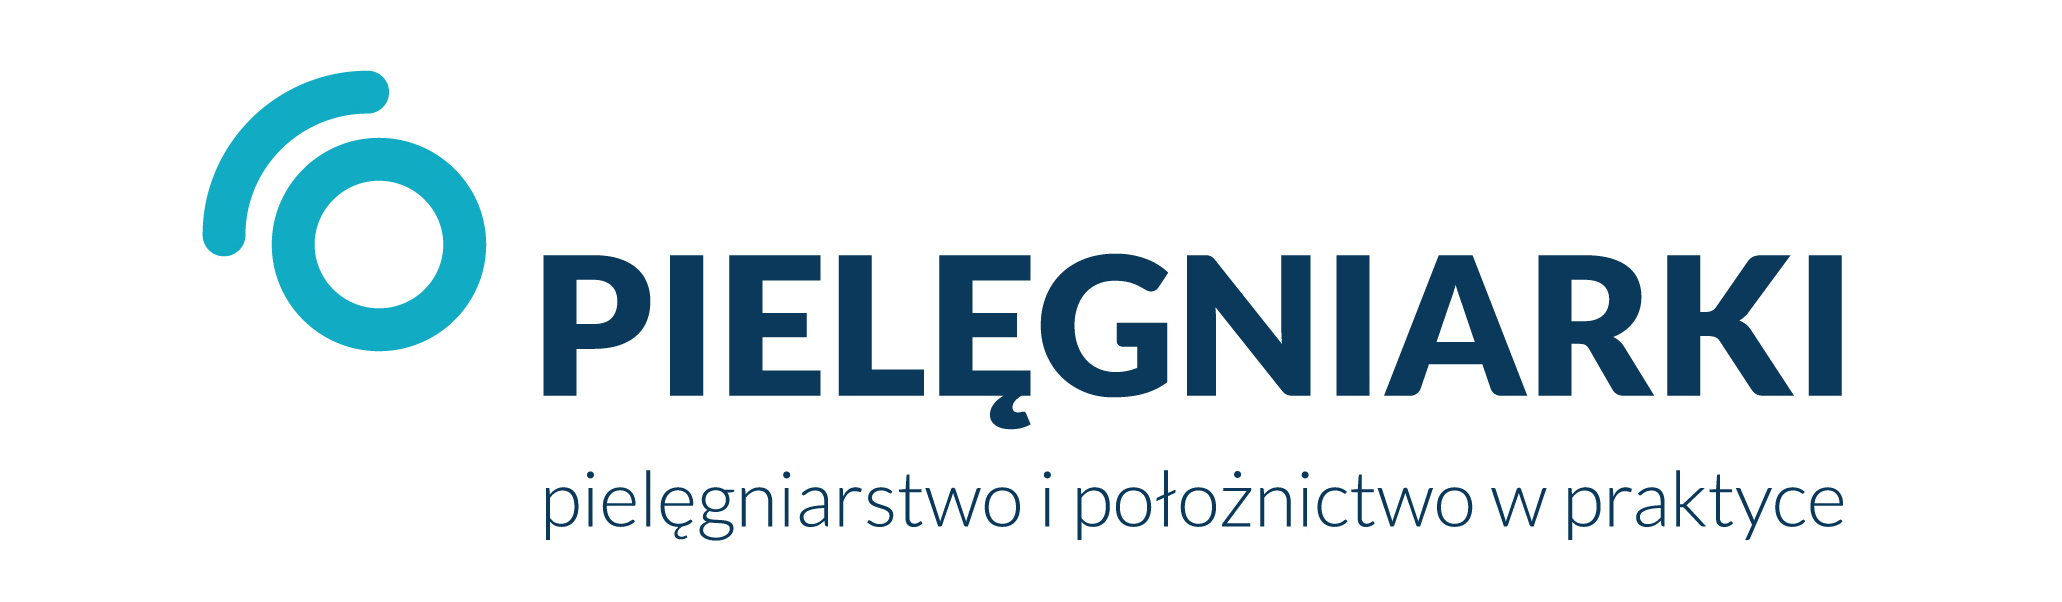 Pielegniarki.com.pl